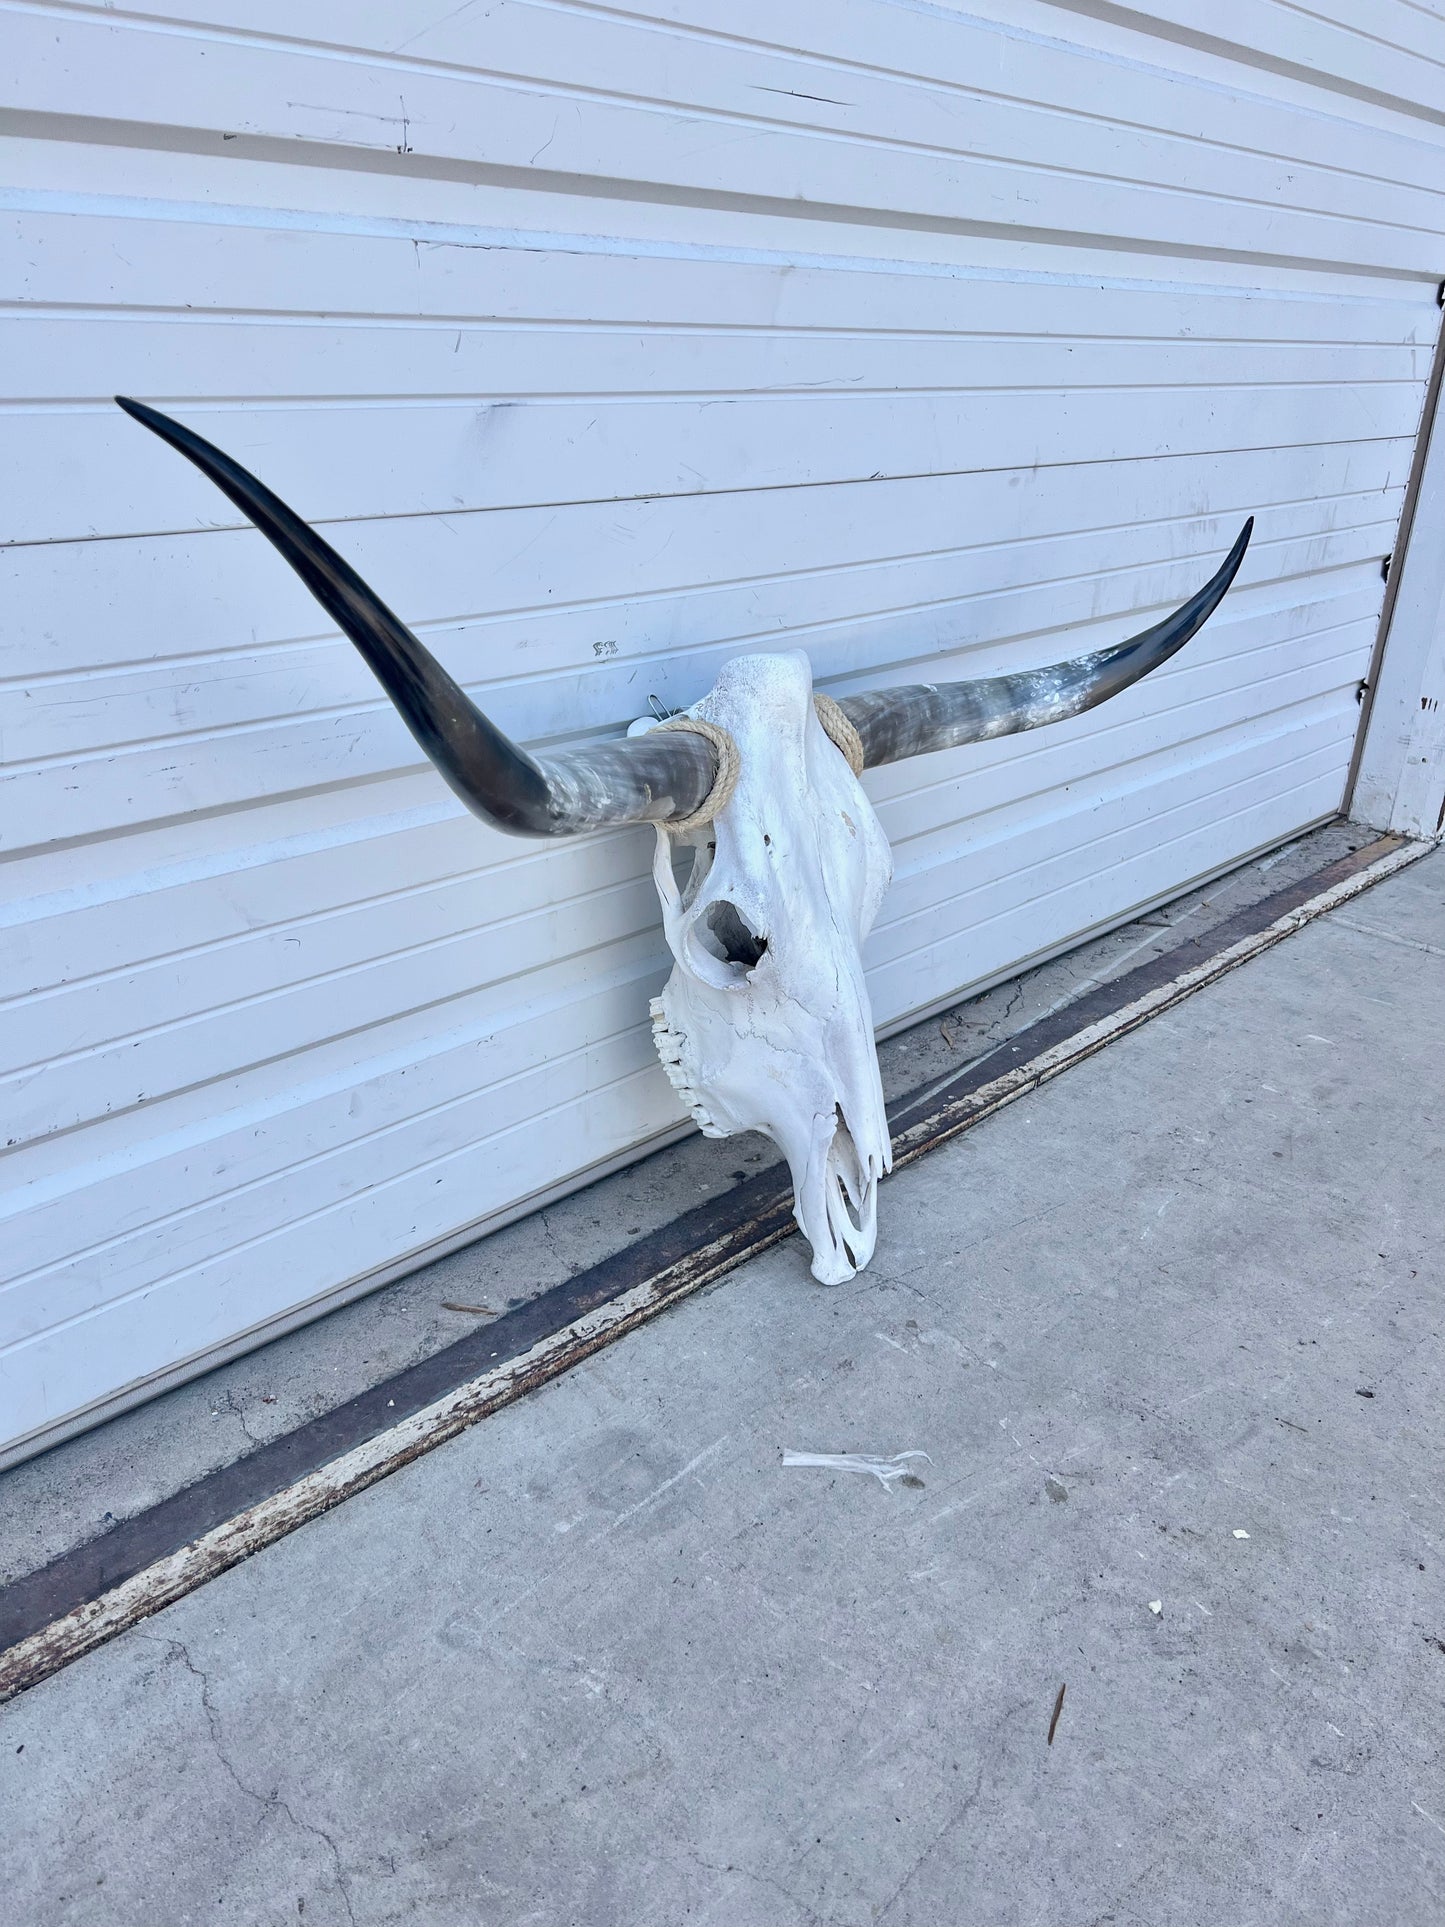 Longhorn Skull